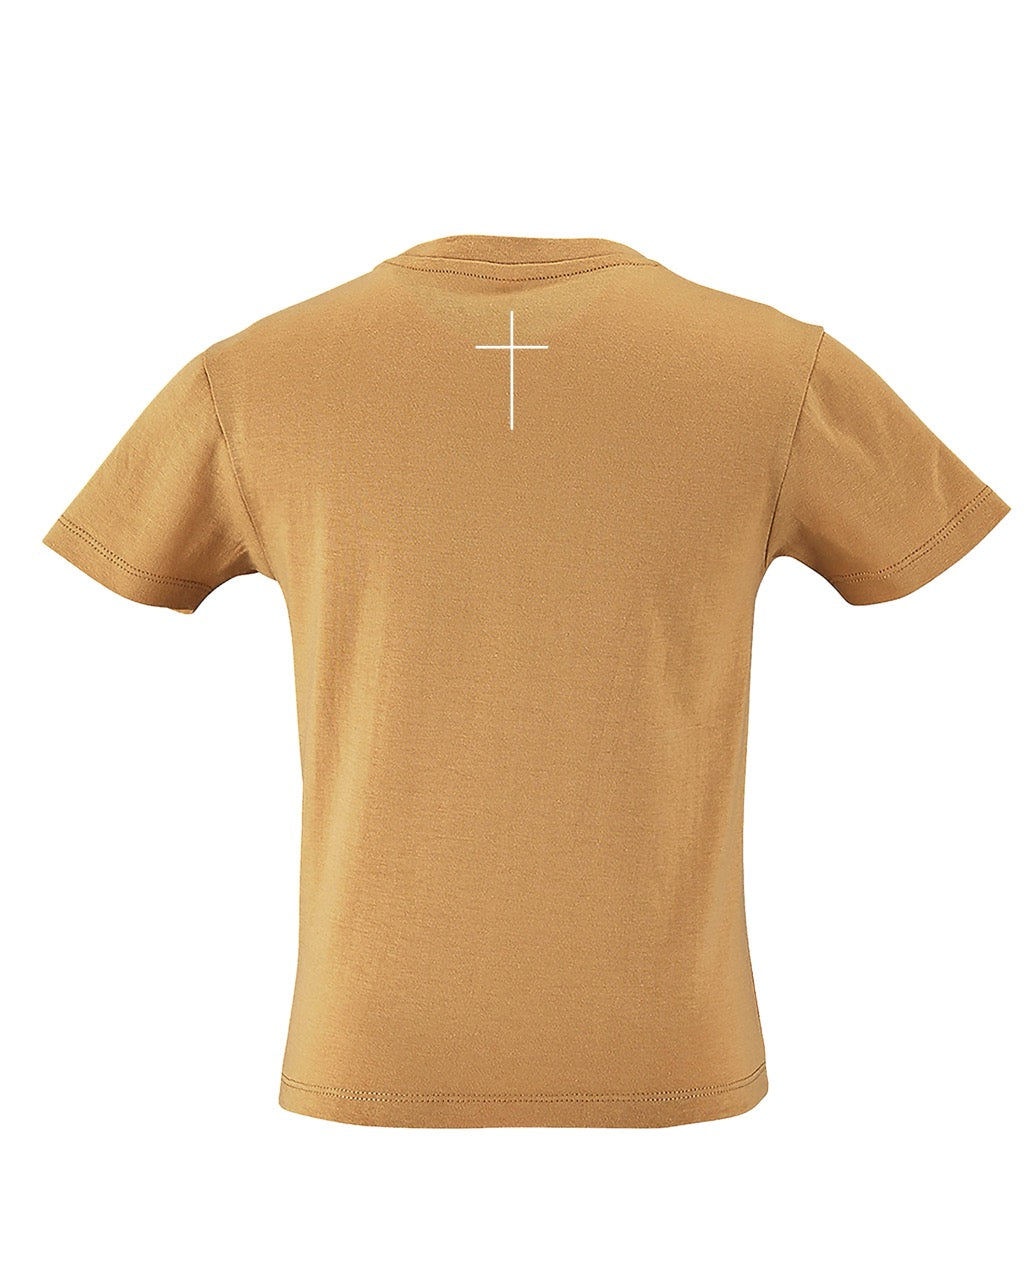 Children's T-Shirt - "Christian"